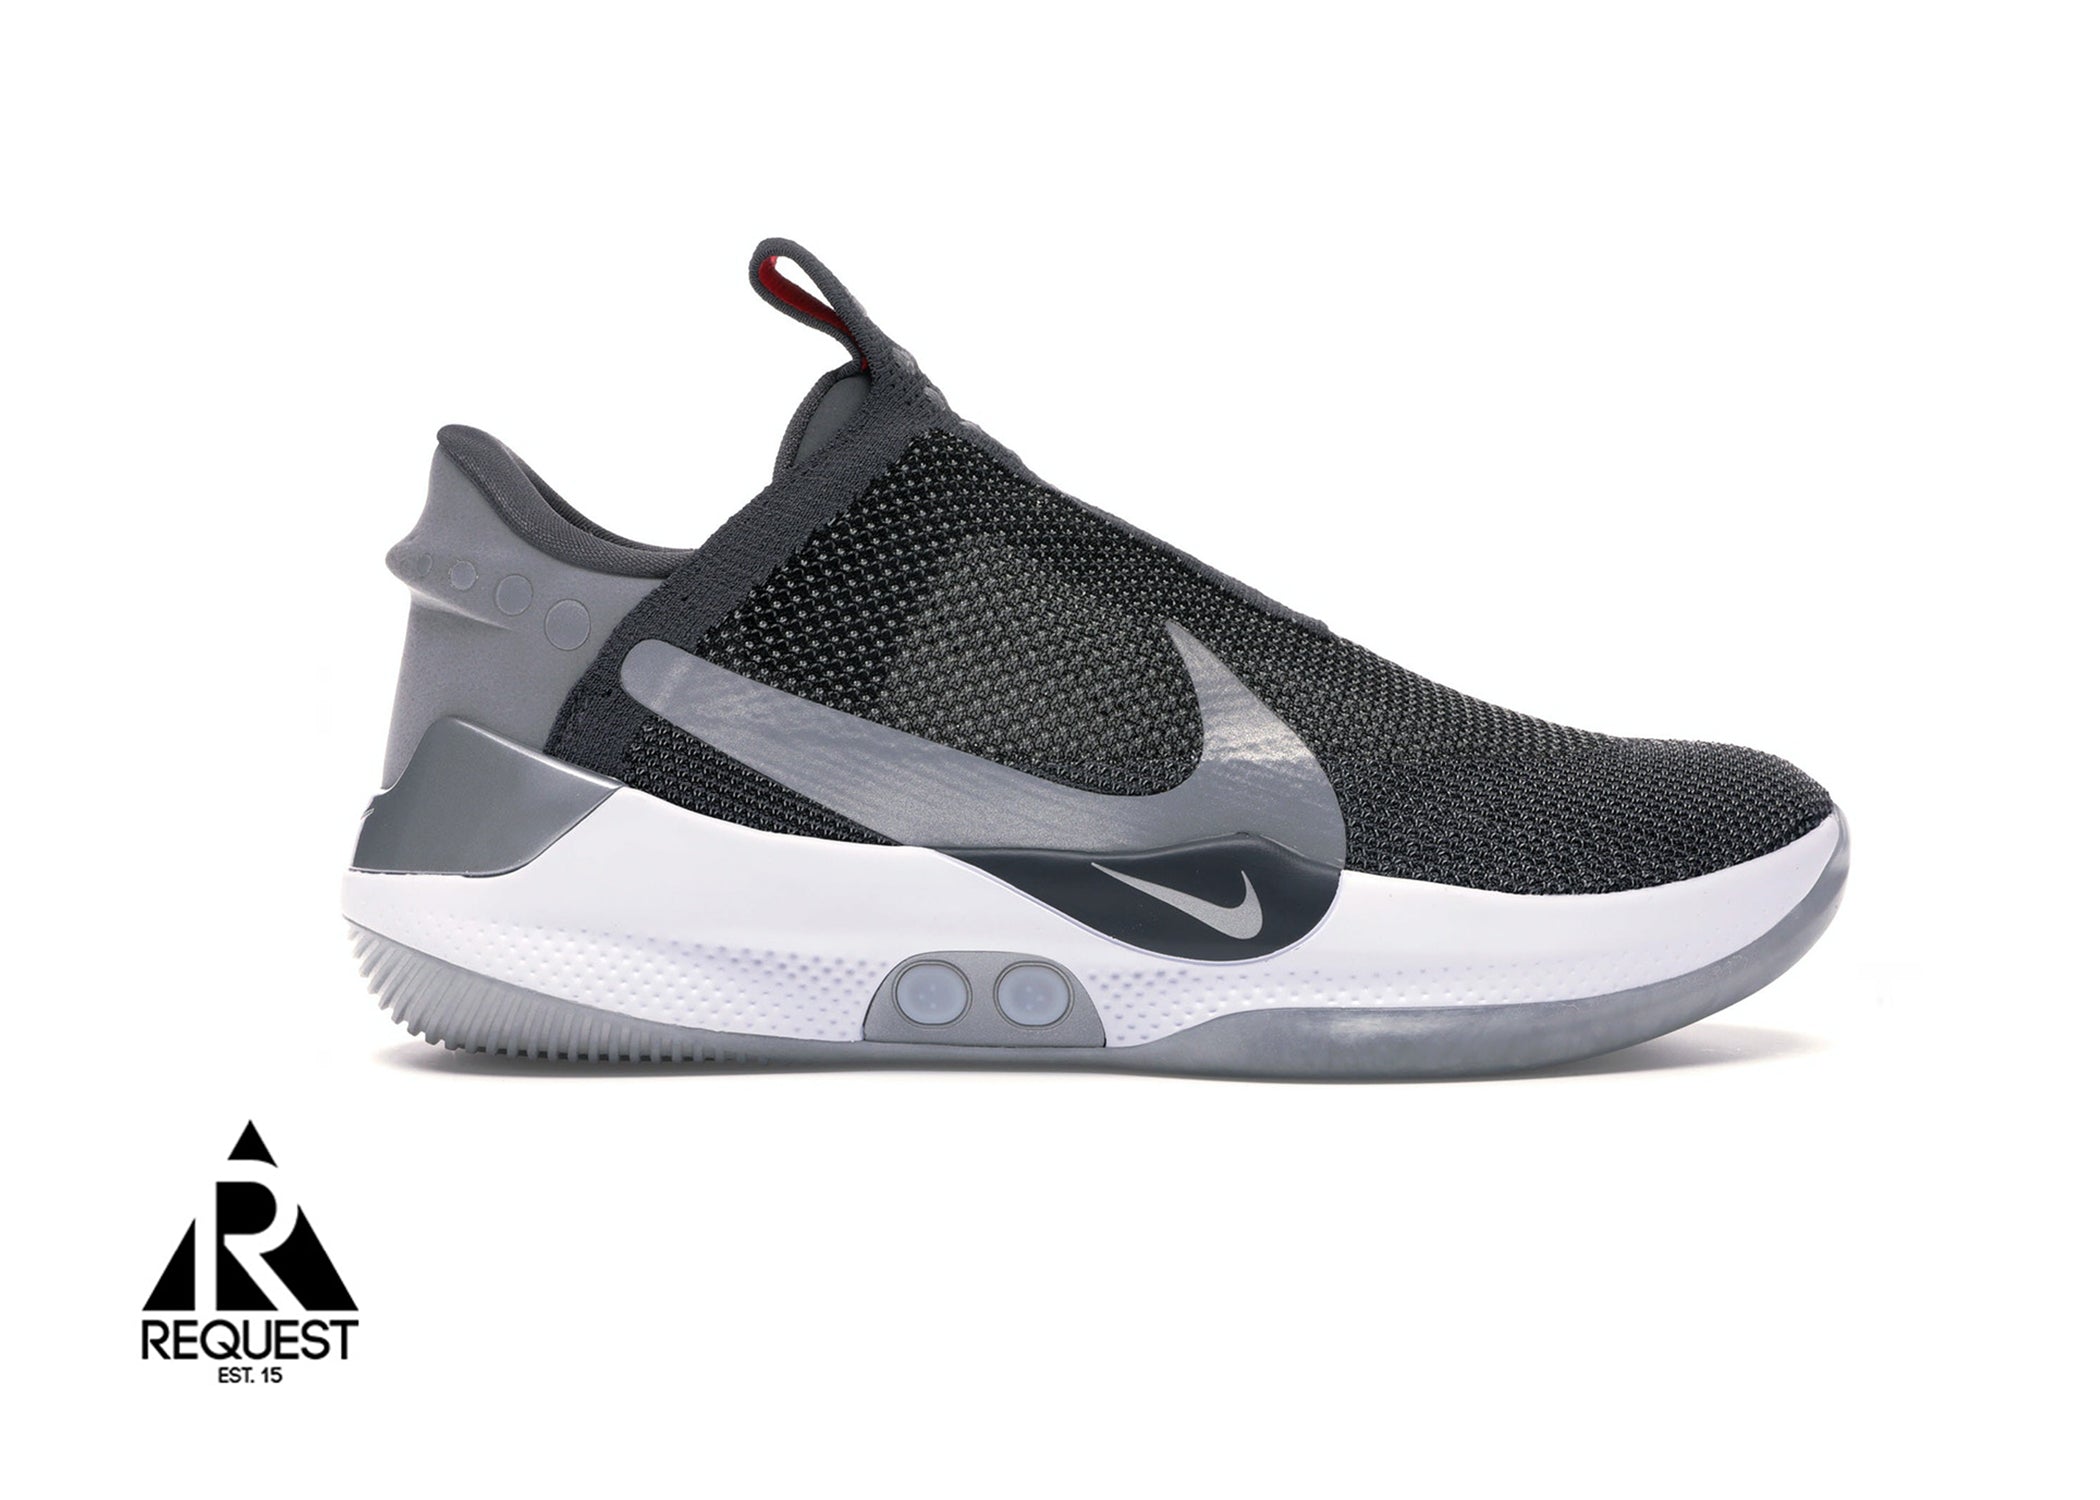 Nike Adapt BB “Dark Grey”